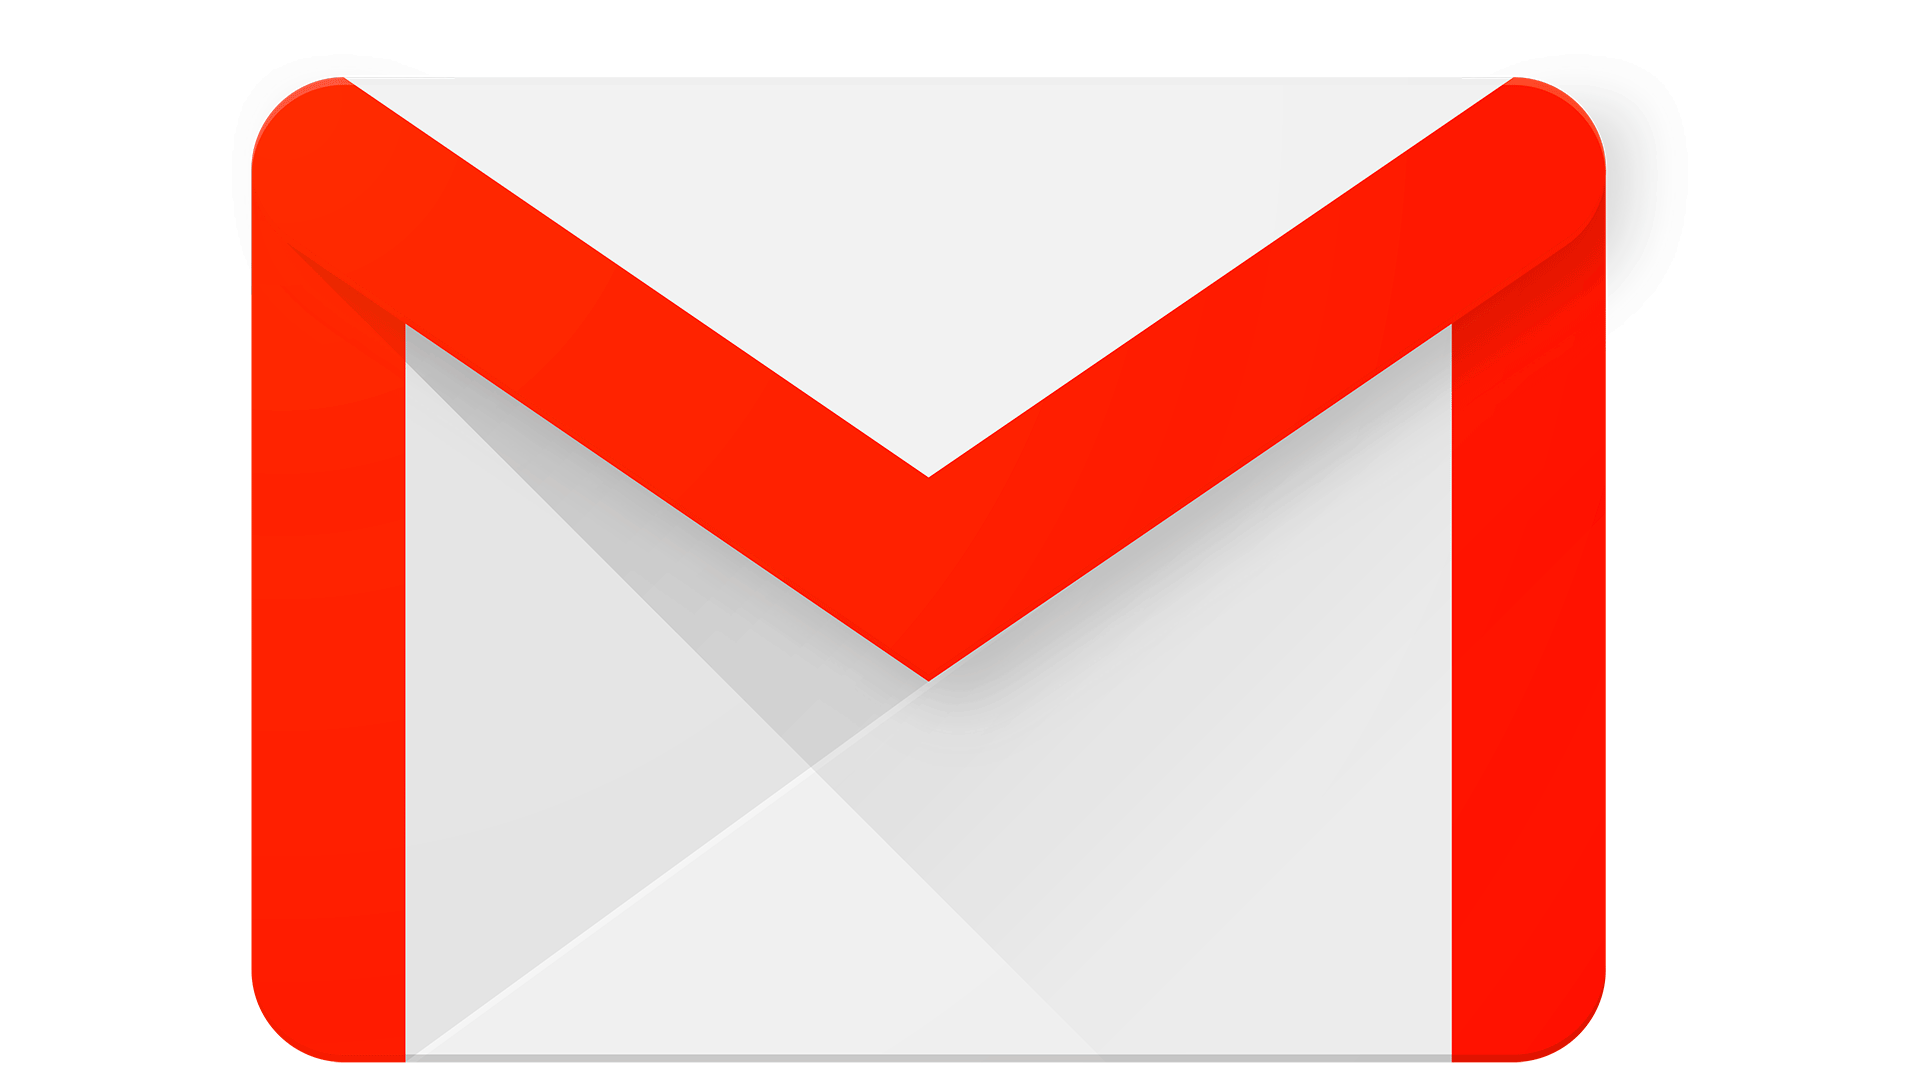 Pro gmail com. Значок гмаил. Значок гугл почты. Иконка приложения gmail.